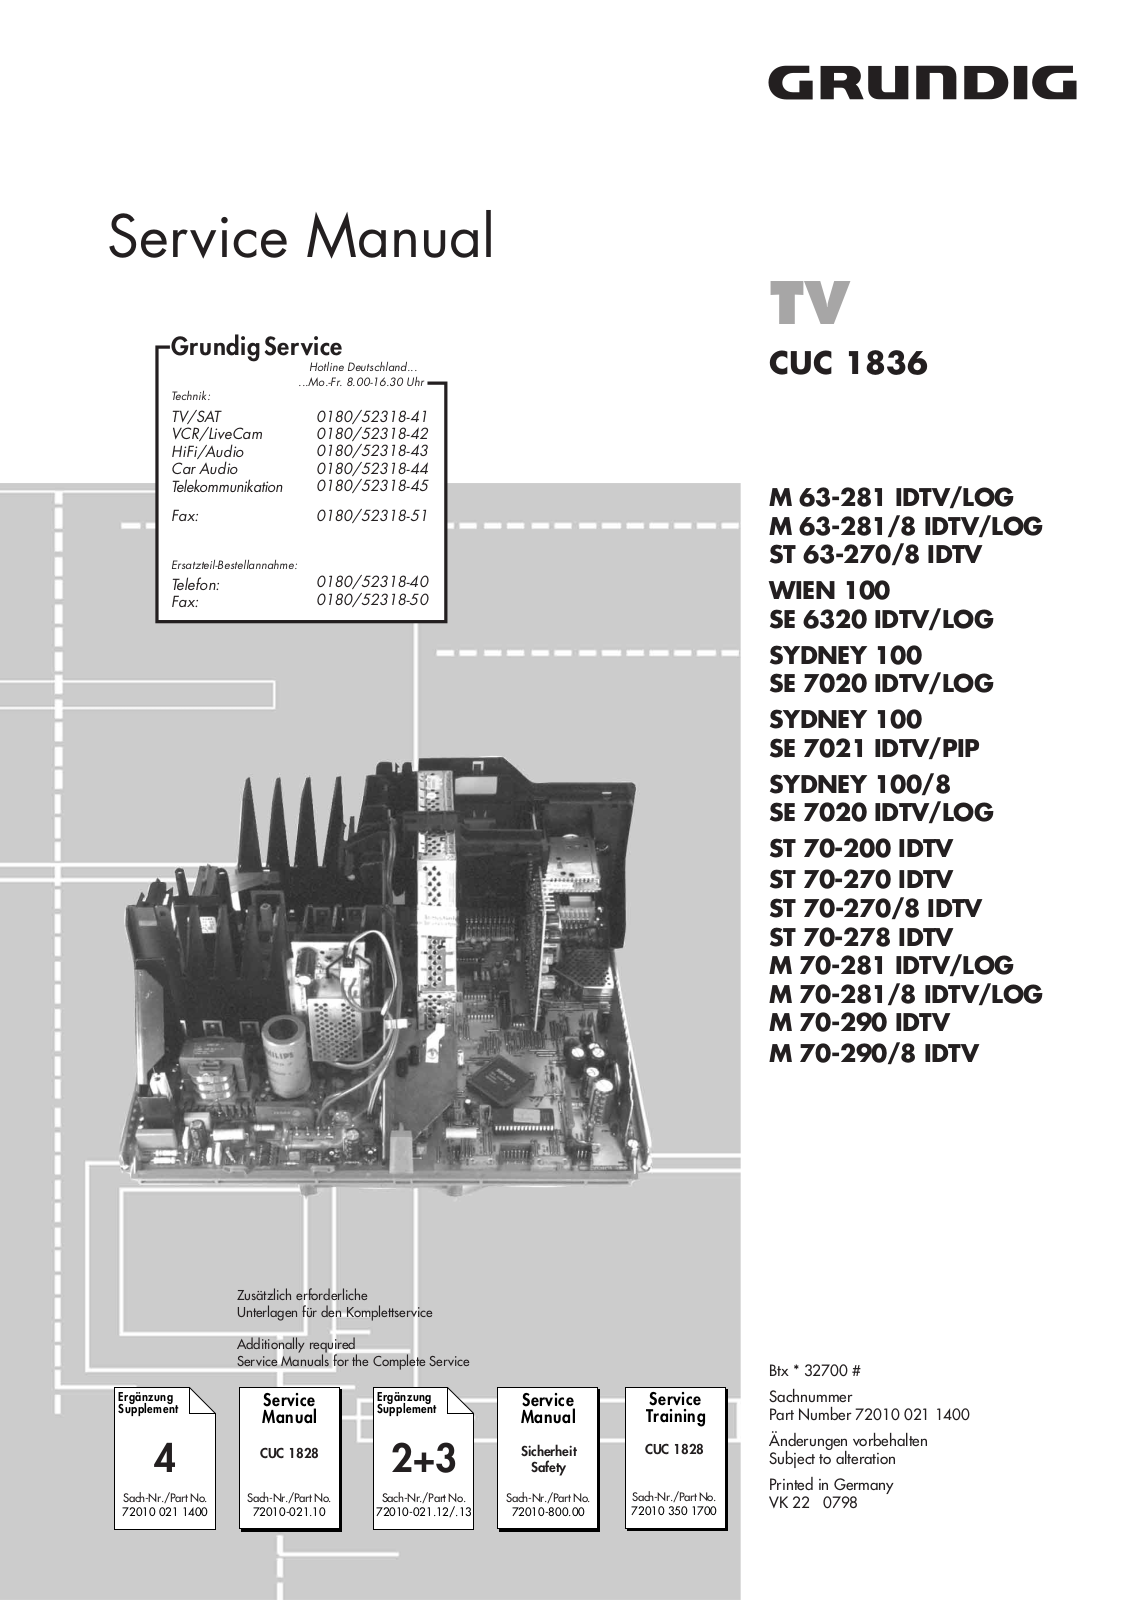 Grundig ST 70-200 IDTV Service Manual